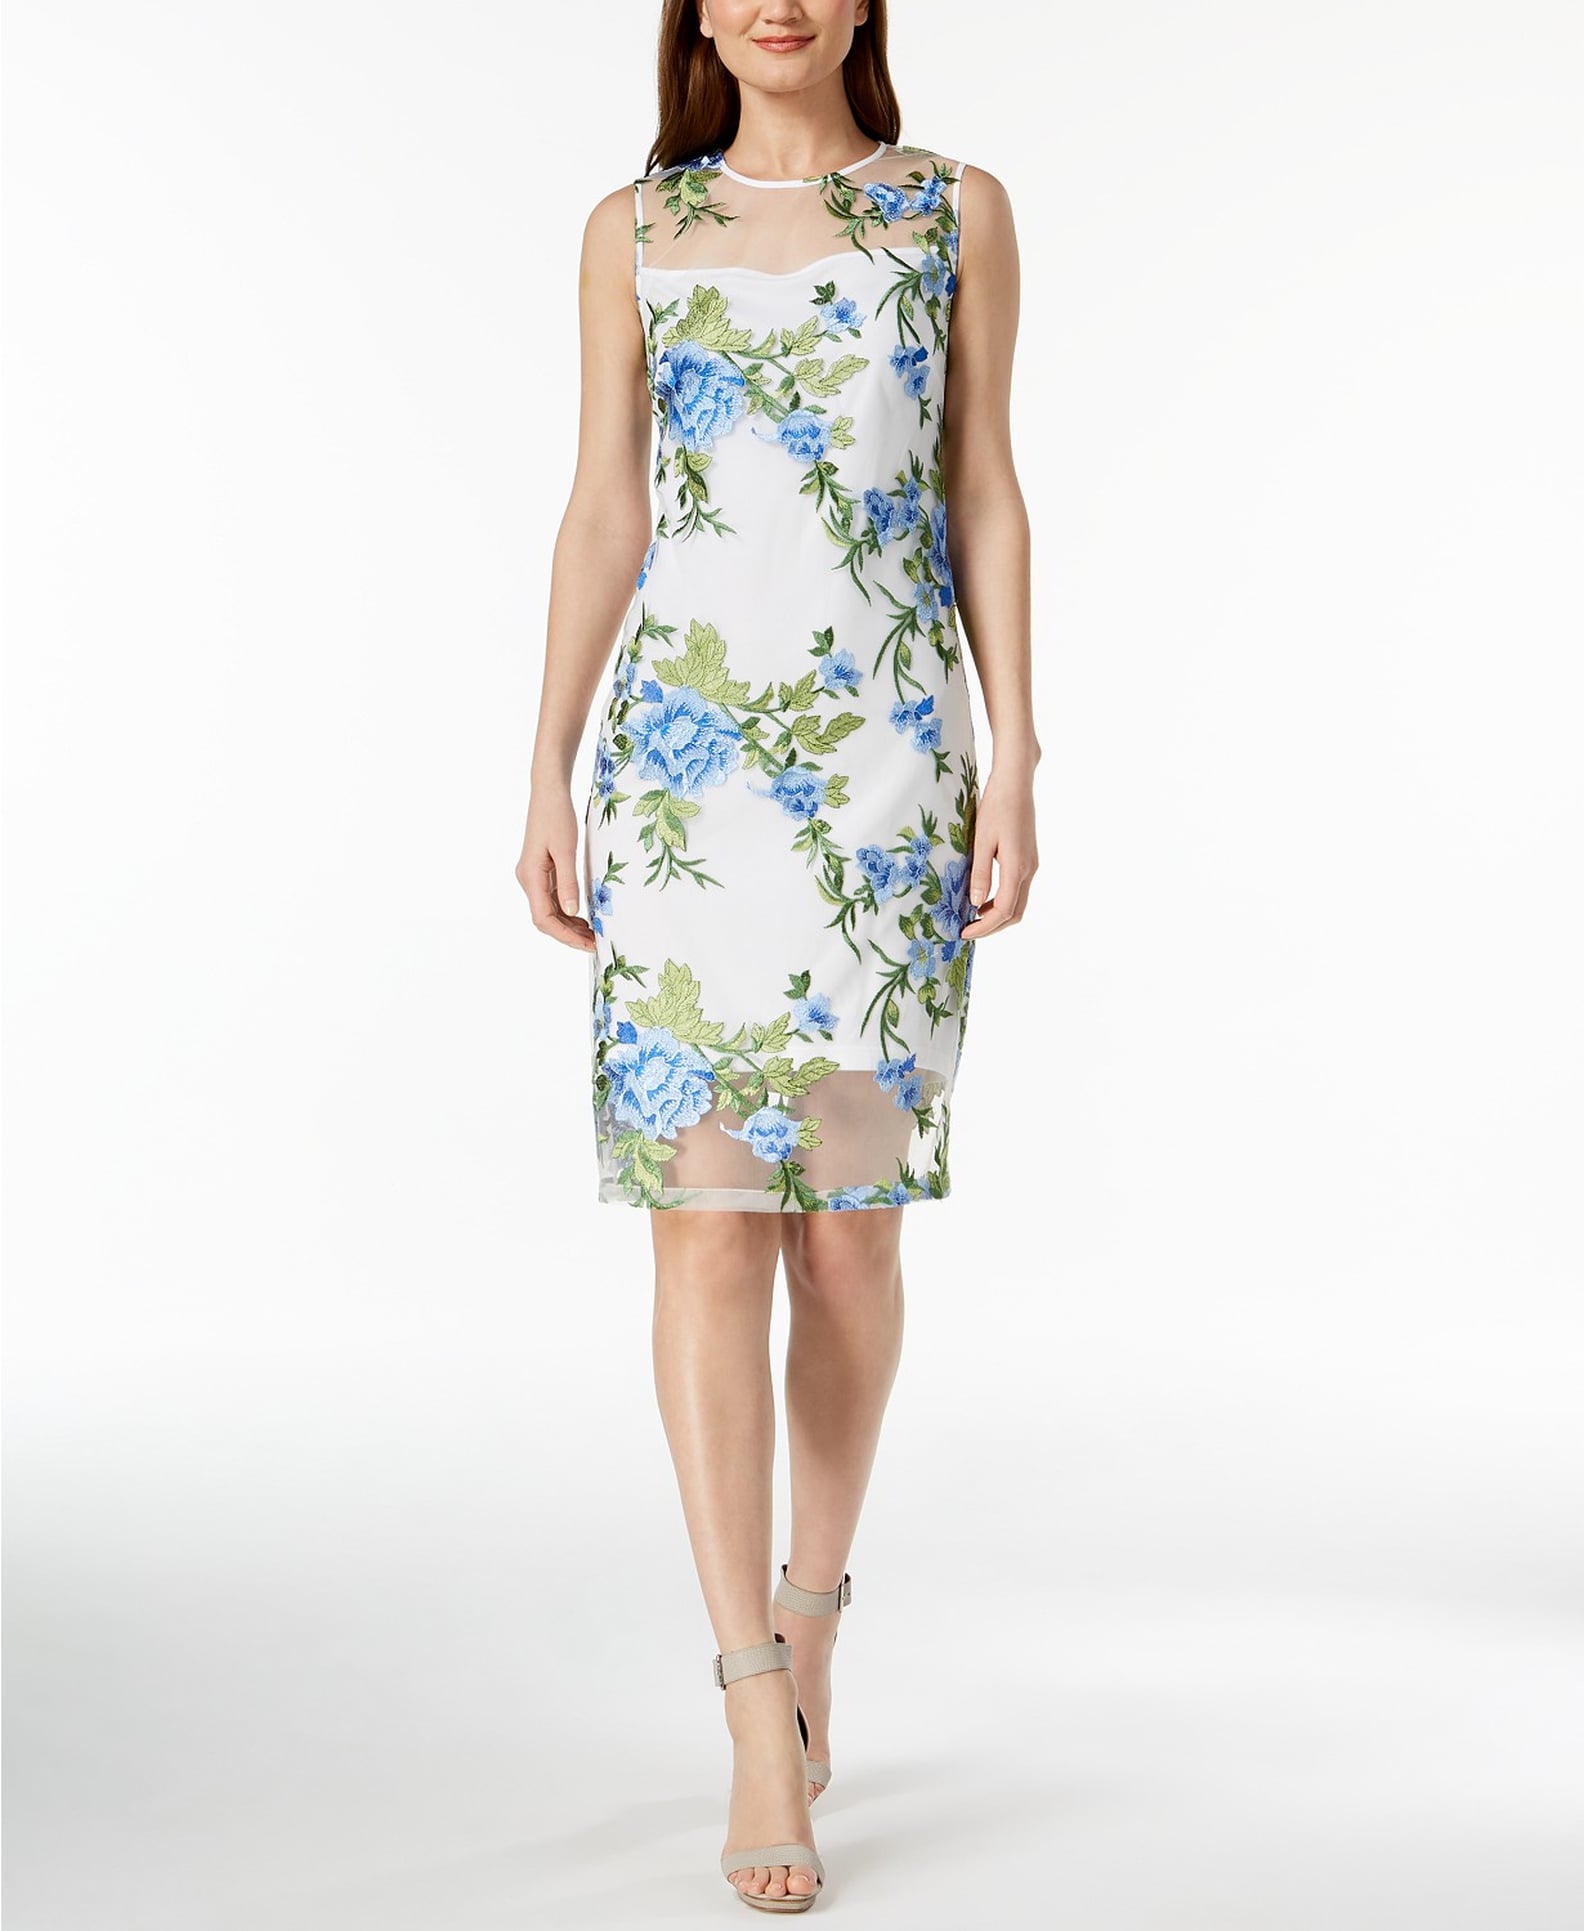 Katie Holmes and Suri Cruise Wearing Floral Dresses | POPSUGAR Fashion